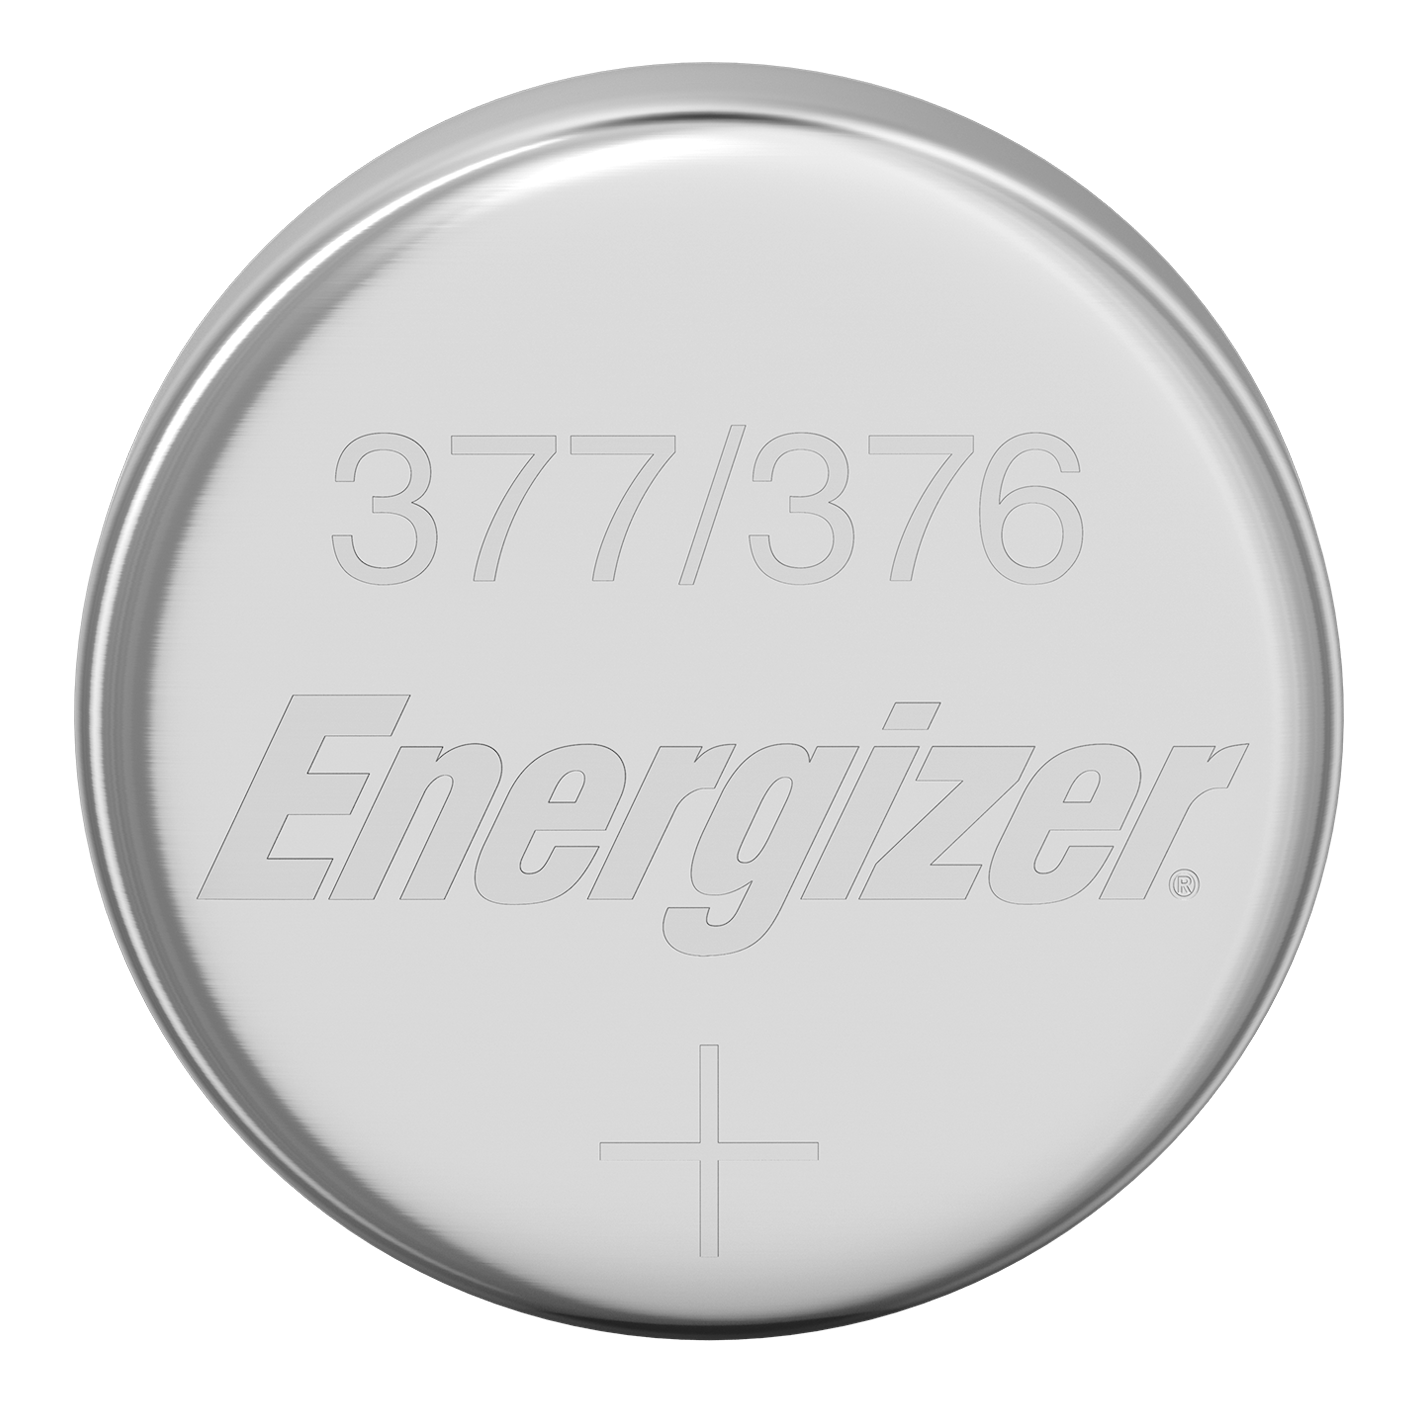 Energizer 377/376 Lithium-Knopfzelle, 10er-Pack